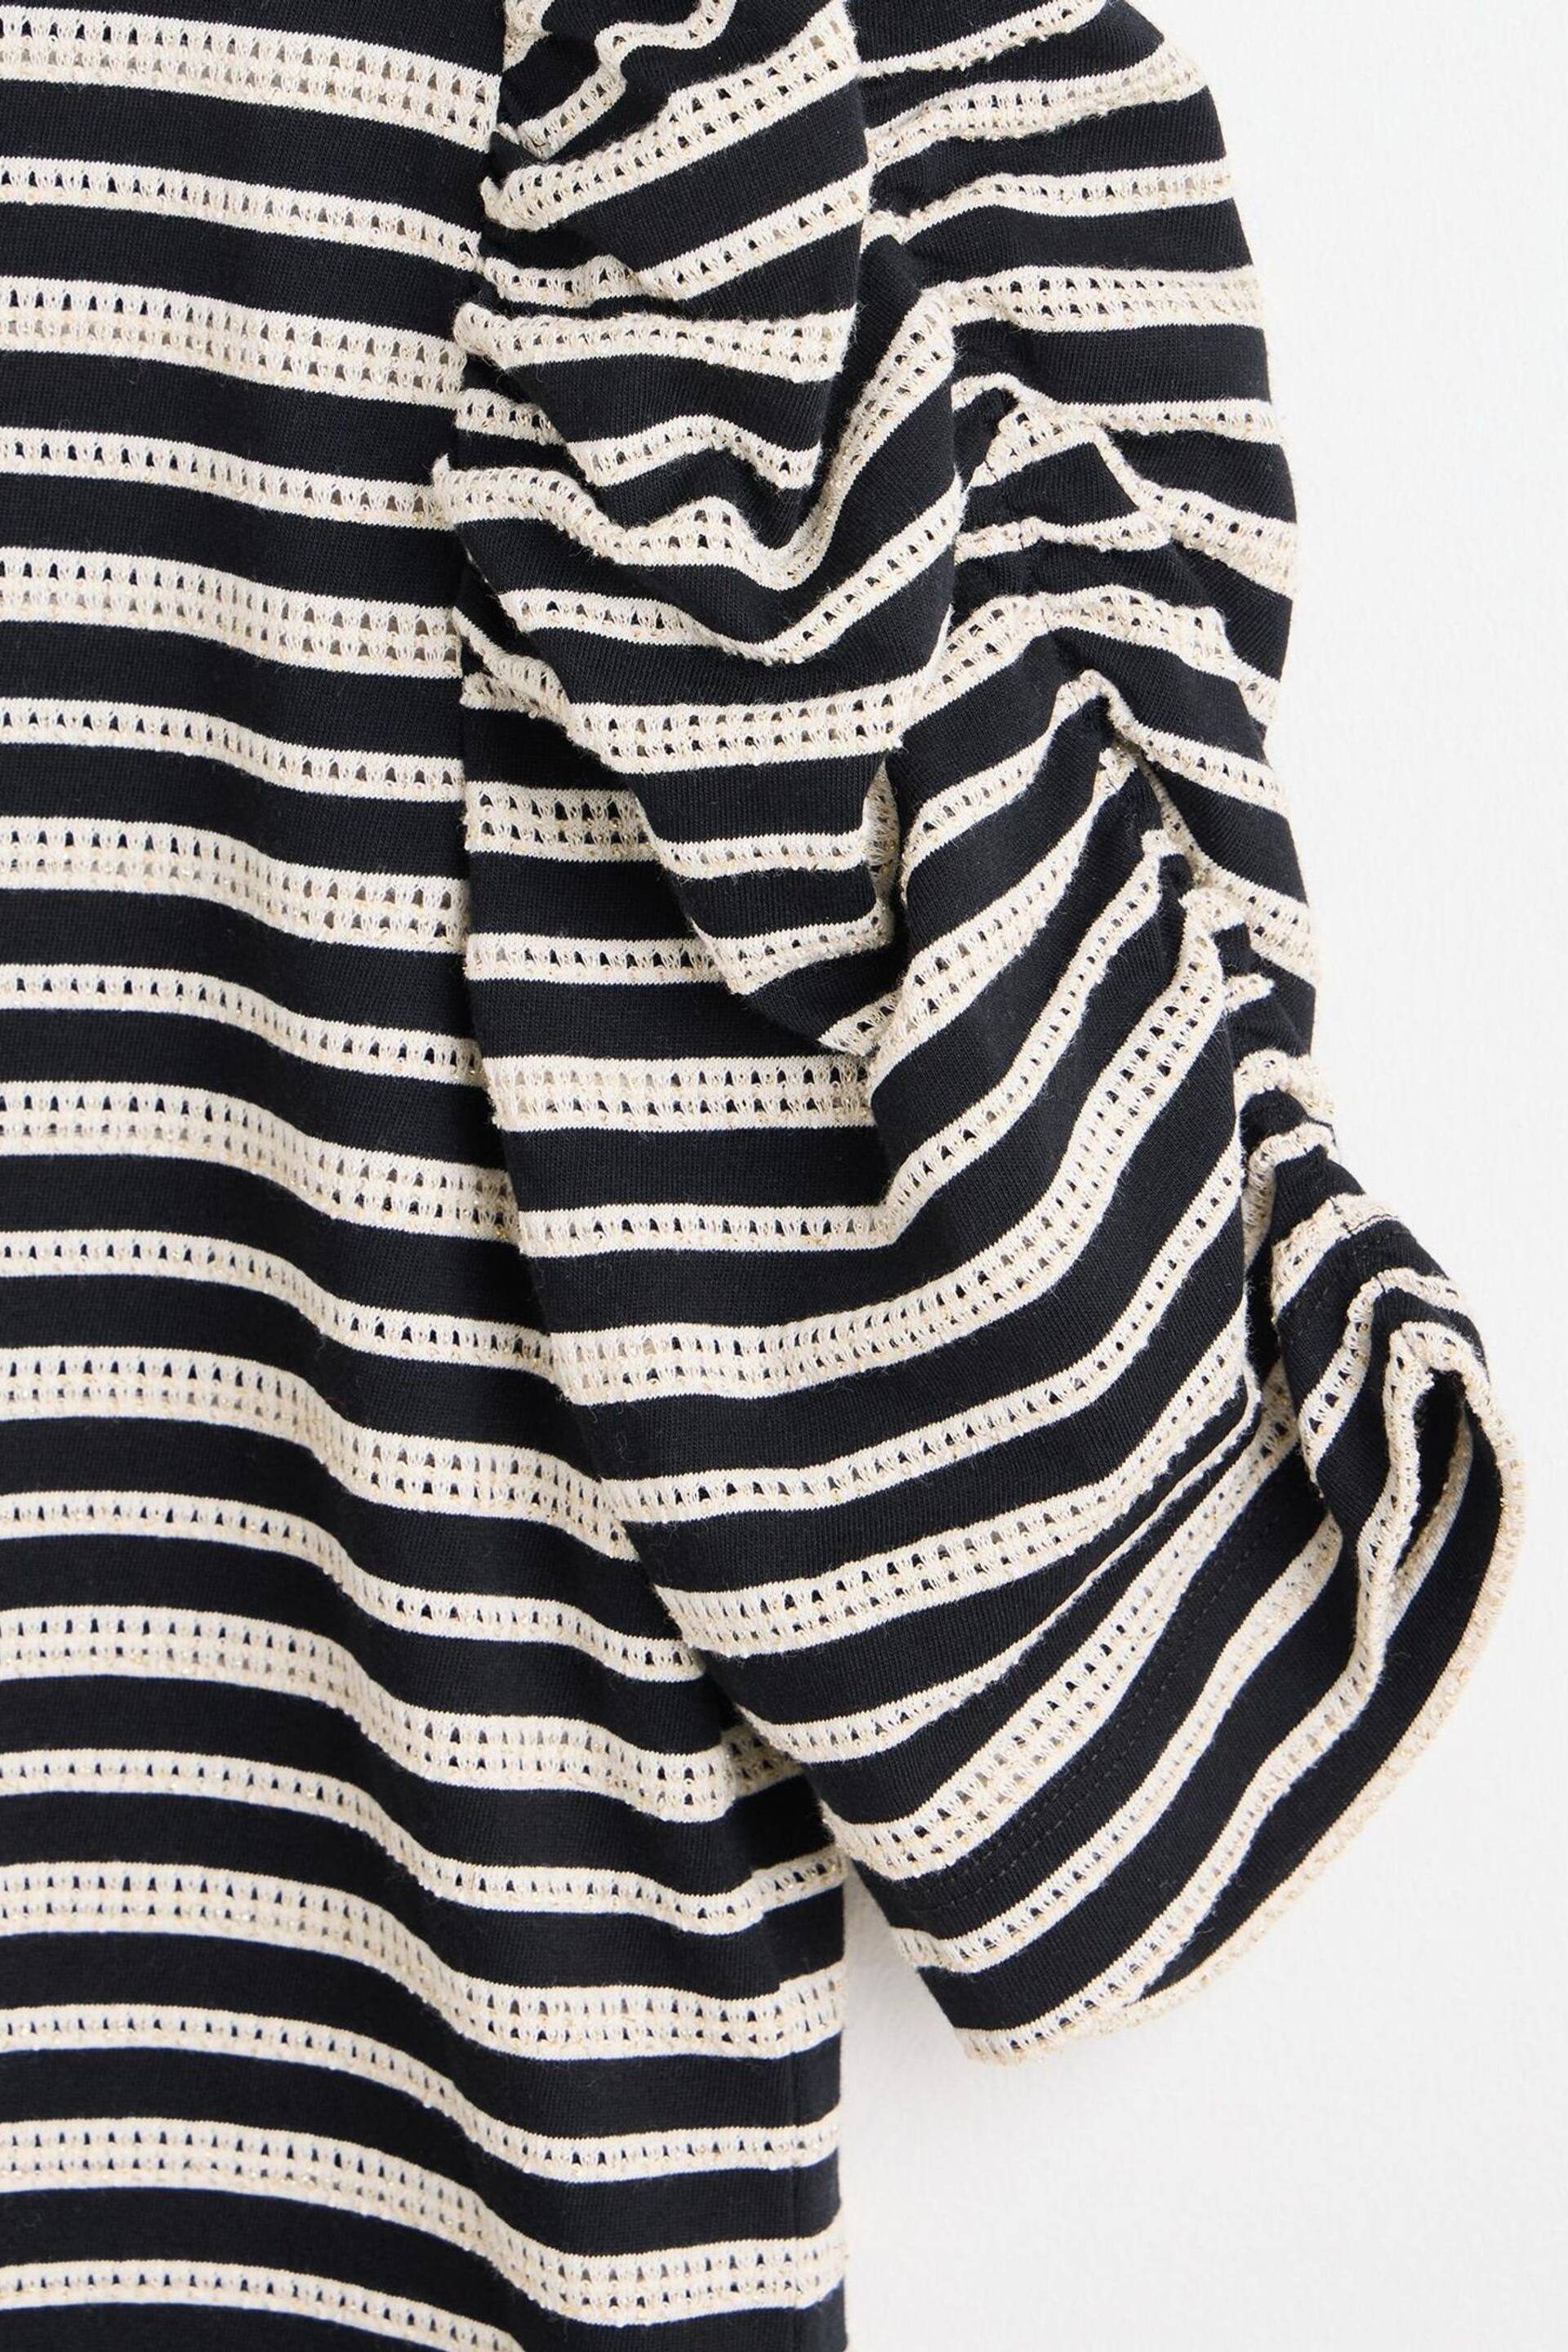 Oliver Bonas Stripe Ruched Sleeve Jersey Black Top - Image 4 of 5